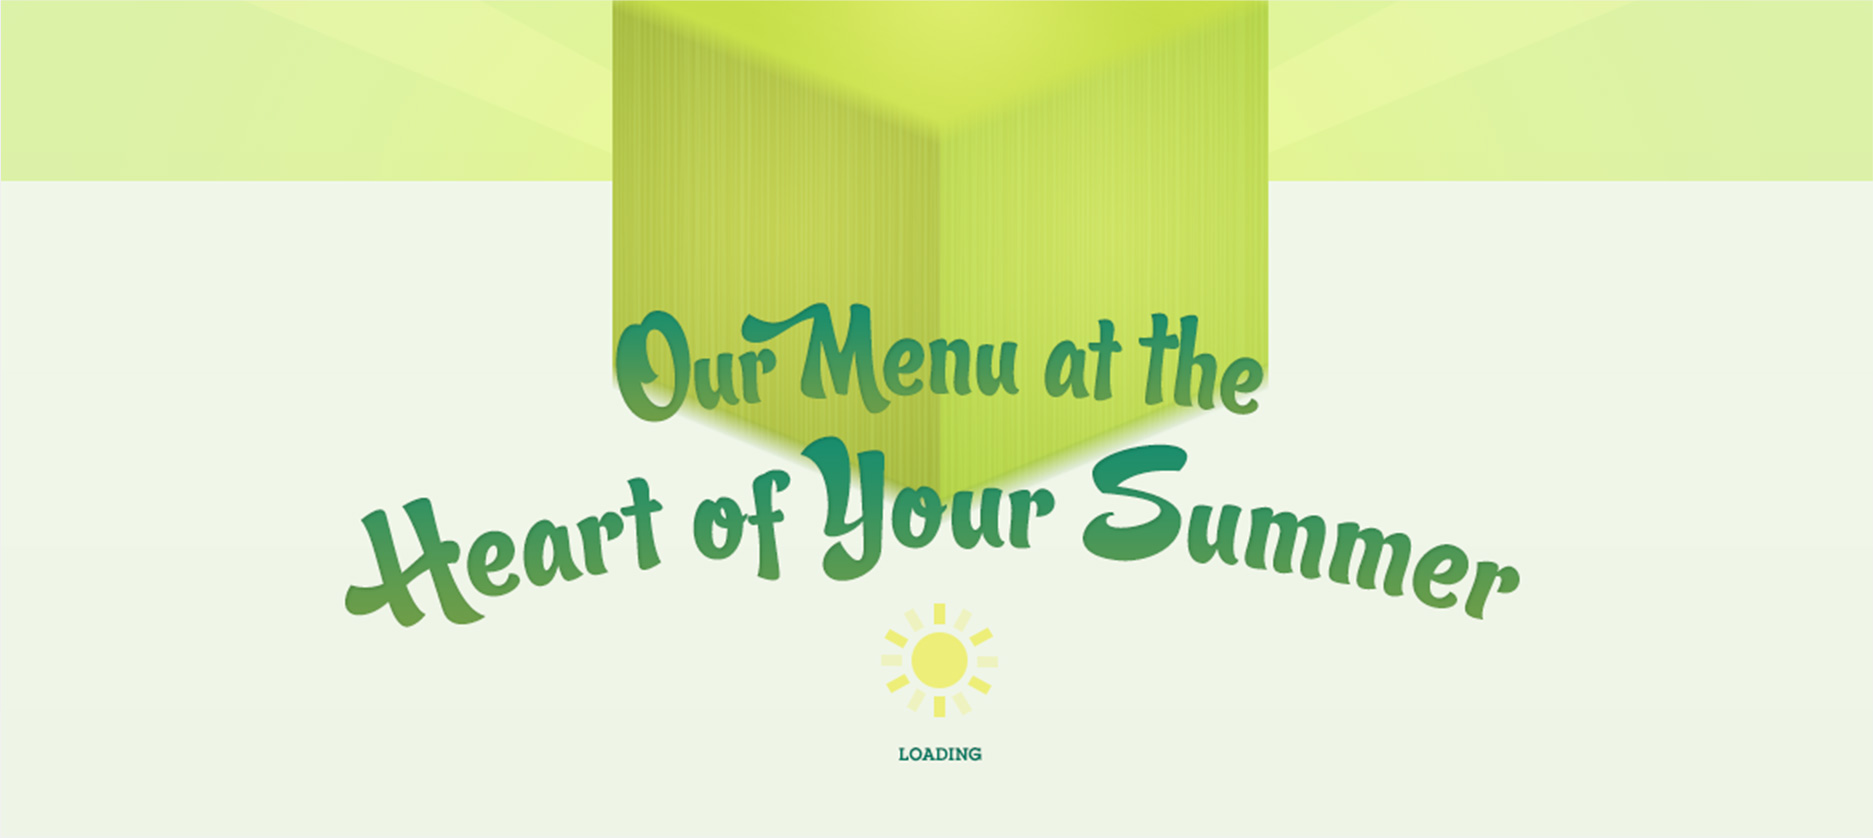 mcdonalds-summer-food-event-design-01